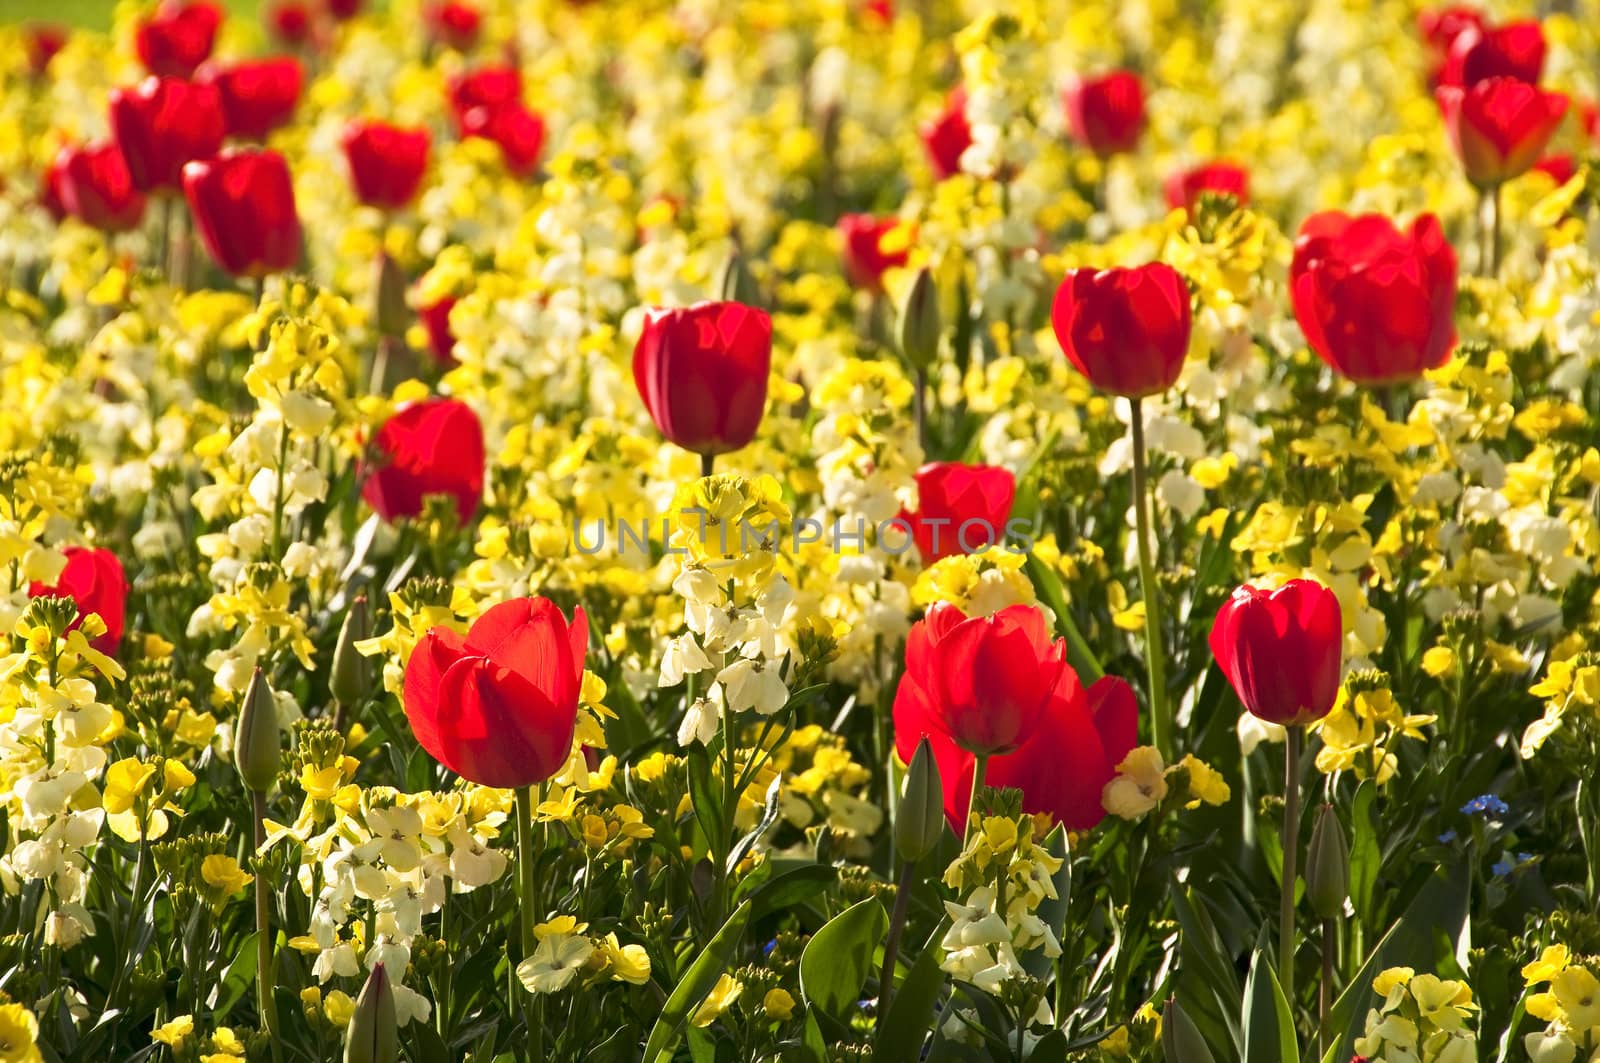 Red tulips by dutourdumonde